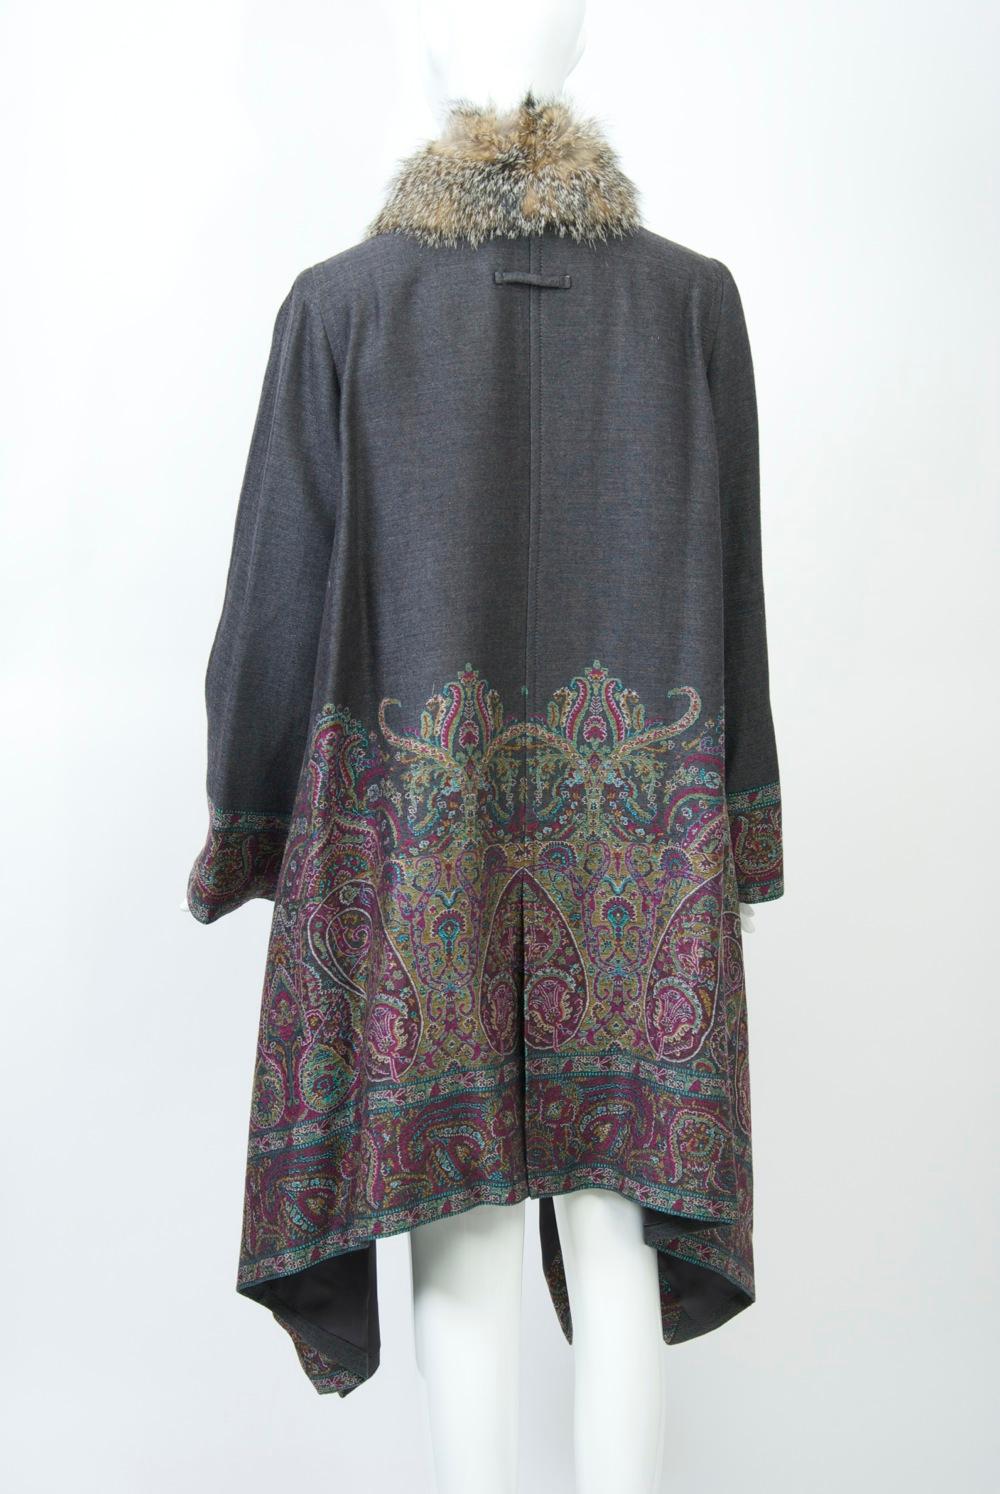 Etro Gray Wool/Paisley Coat with Handkerchief Hem 3